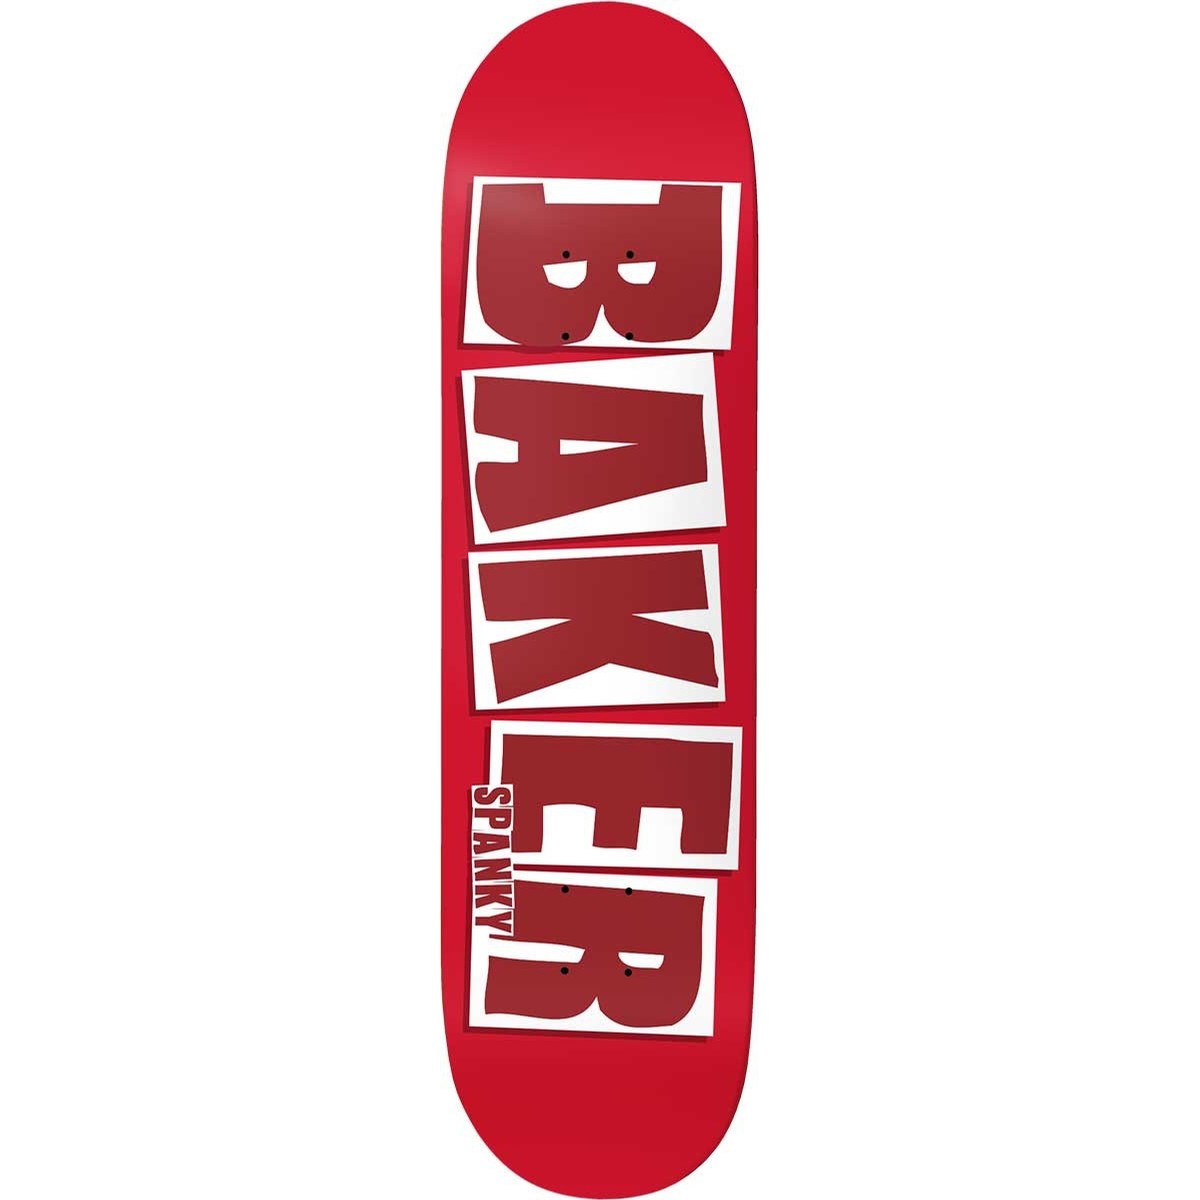 BAKER KL BRAND NAME RED DECK (8.25") - The Drive Skateshop